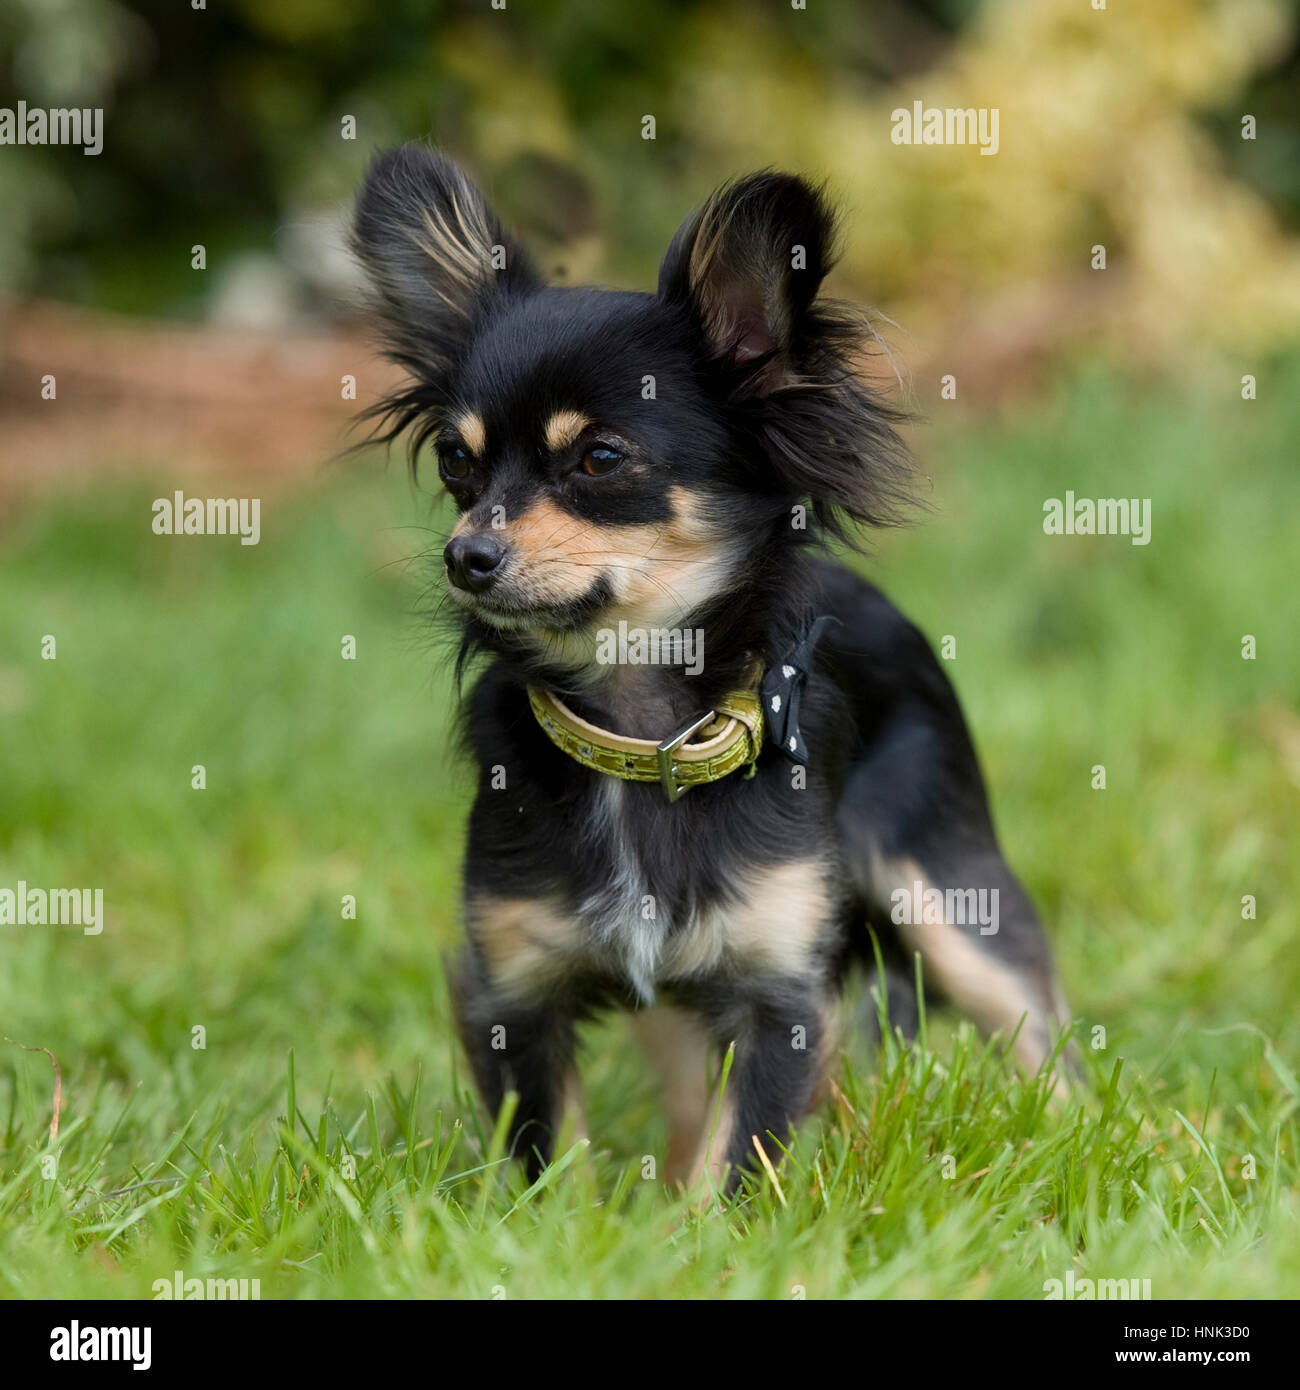 45+ Black And Tan Smooth Coat Chihuahua l2sanpiero